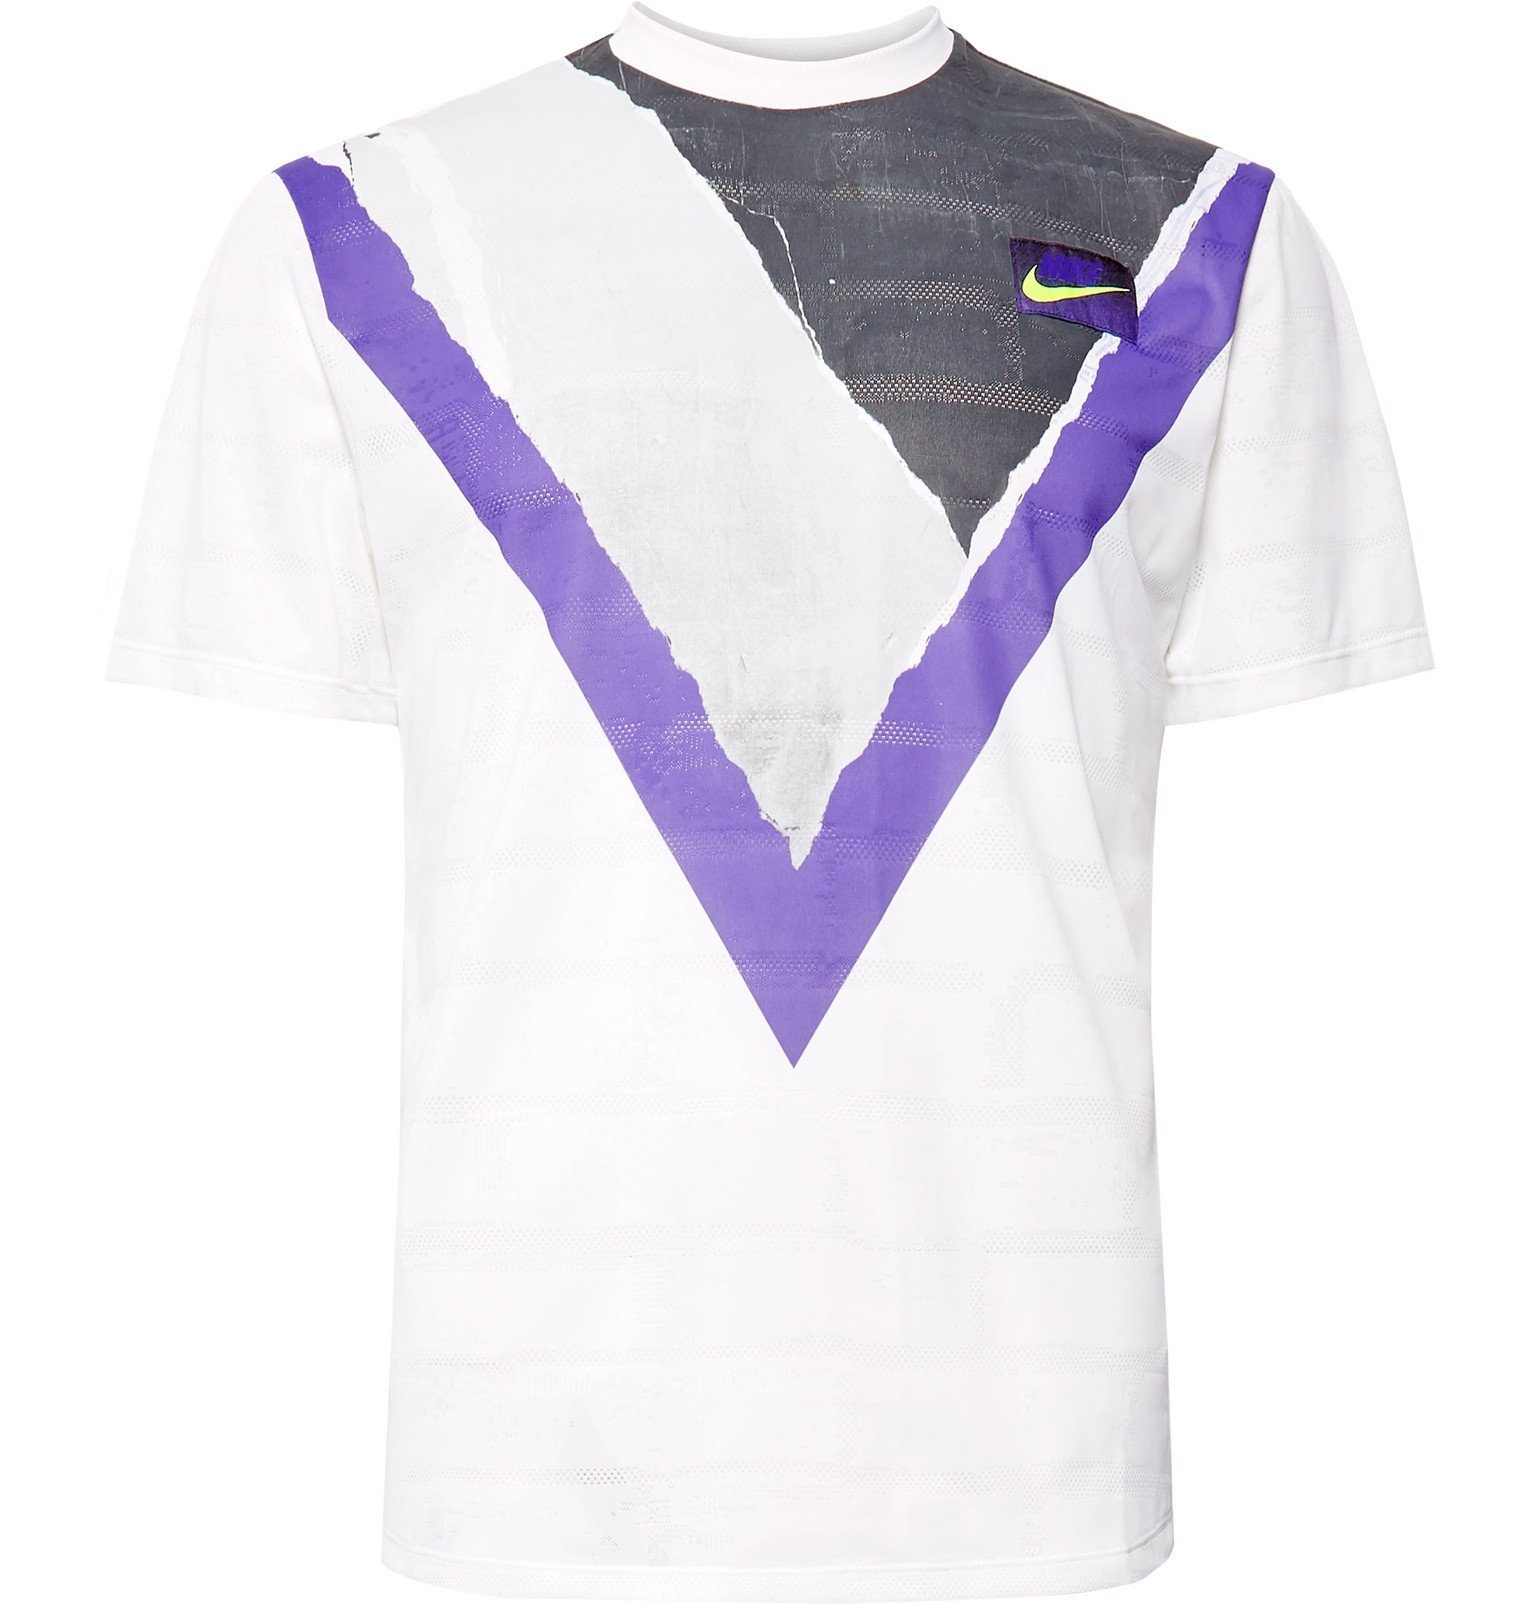 white and purple nike t shirt